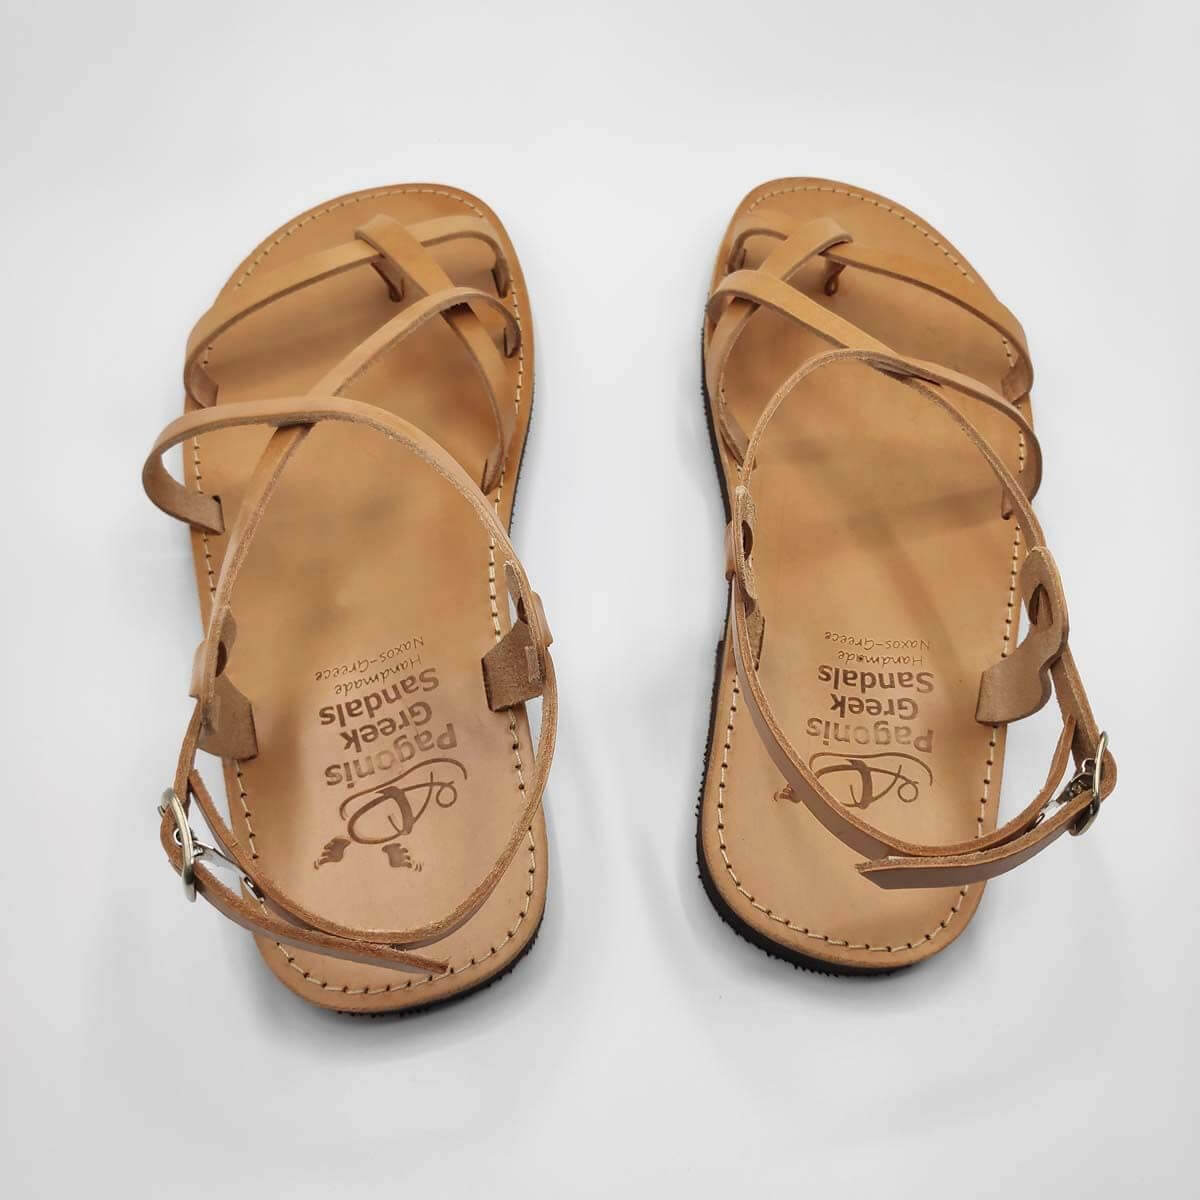 SPARTA Slipper's MEN'S Roman Greek Handmade Leather Sandals Made from 100% Genuine Leather Gift for Him Slim Light Soft Comfortable